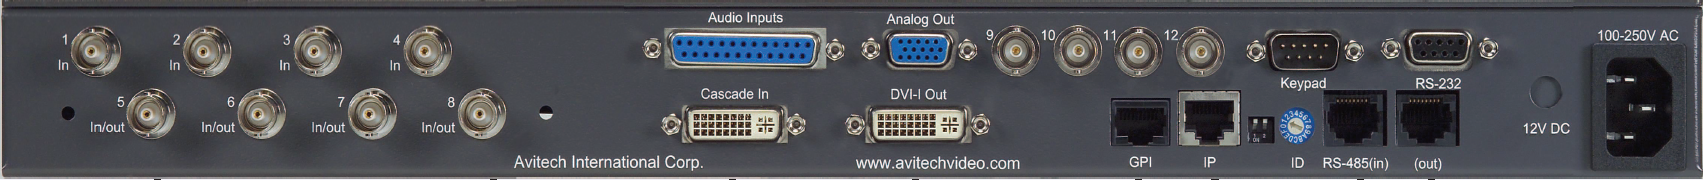 AVITECH Multiviewer MCC-8004aL